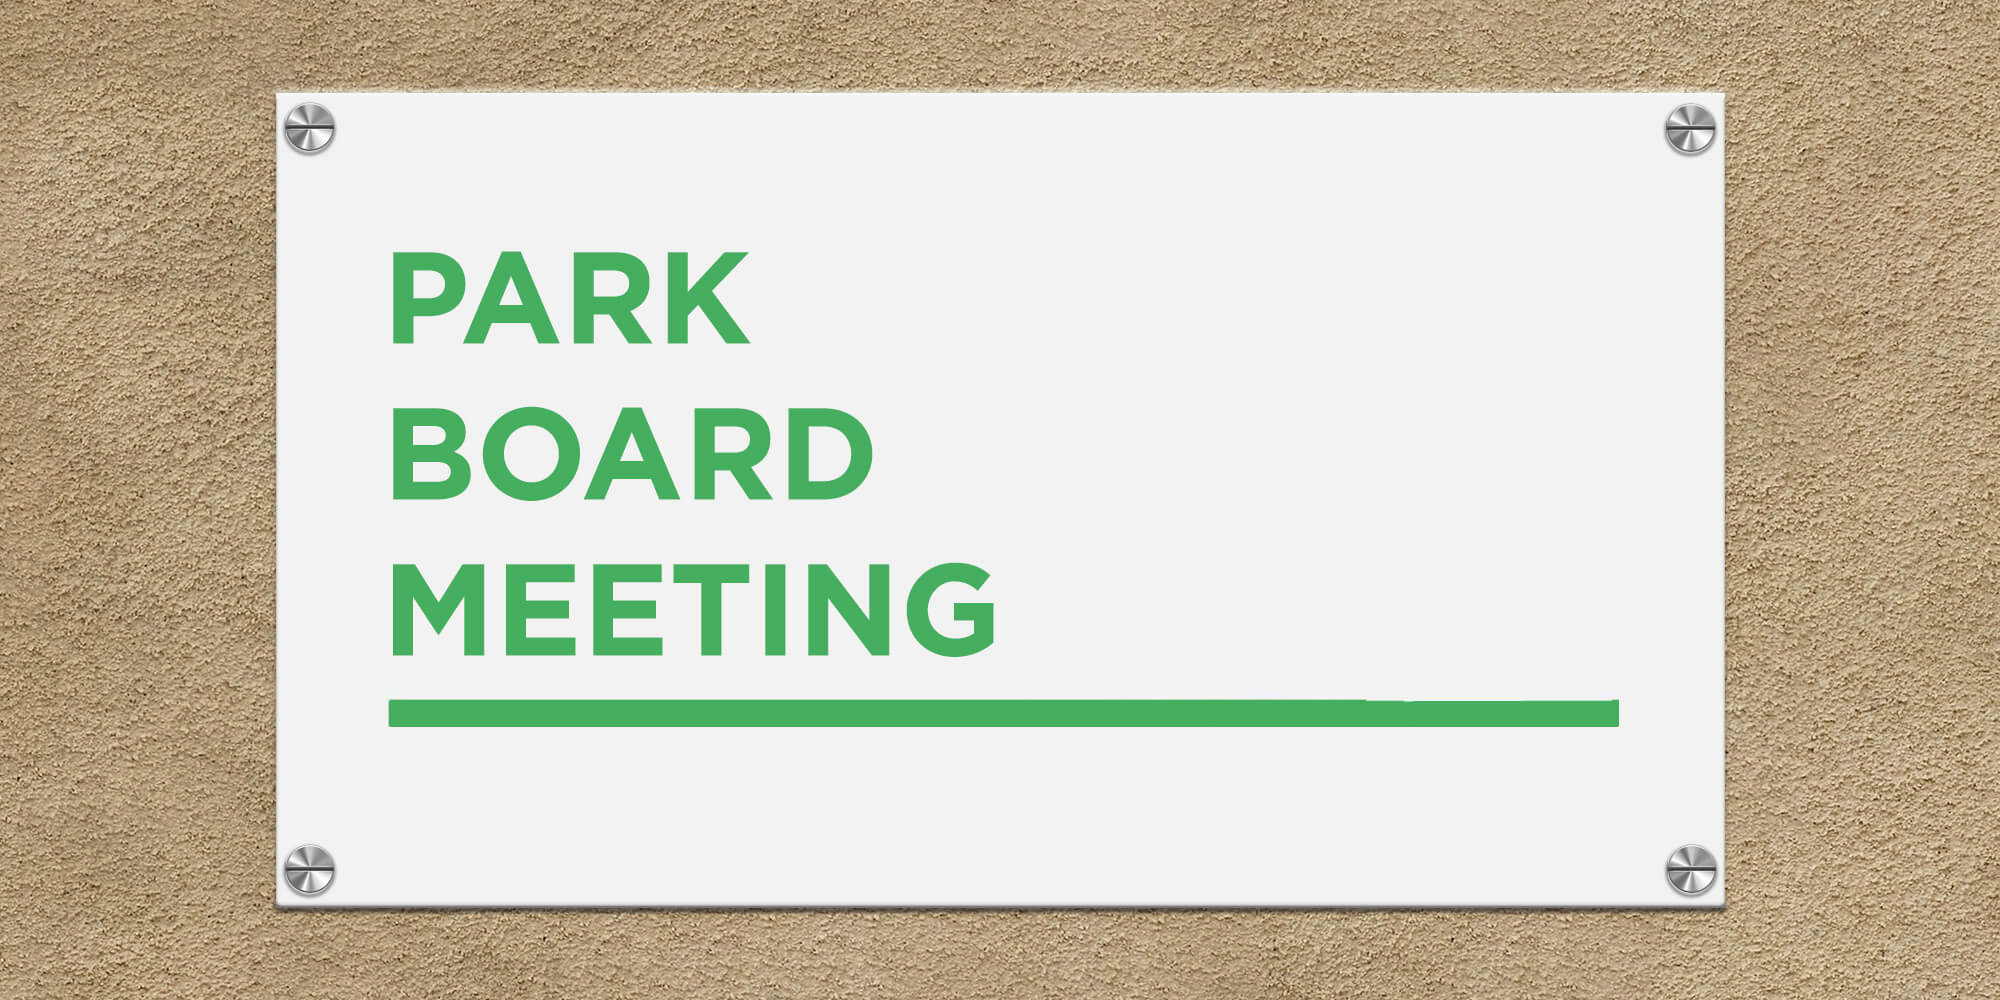 Park Board Meeting – Village of Union City Ohio